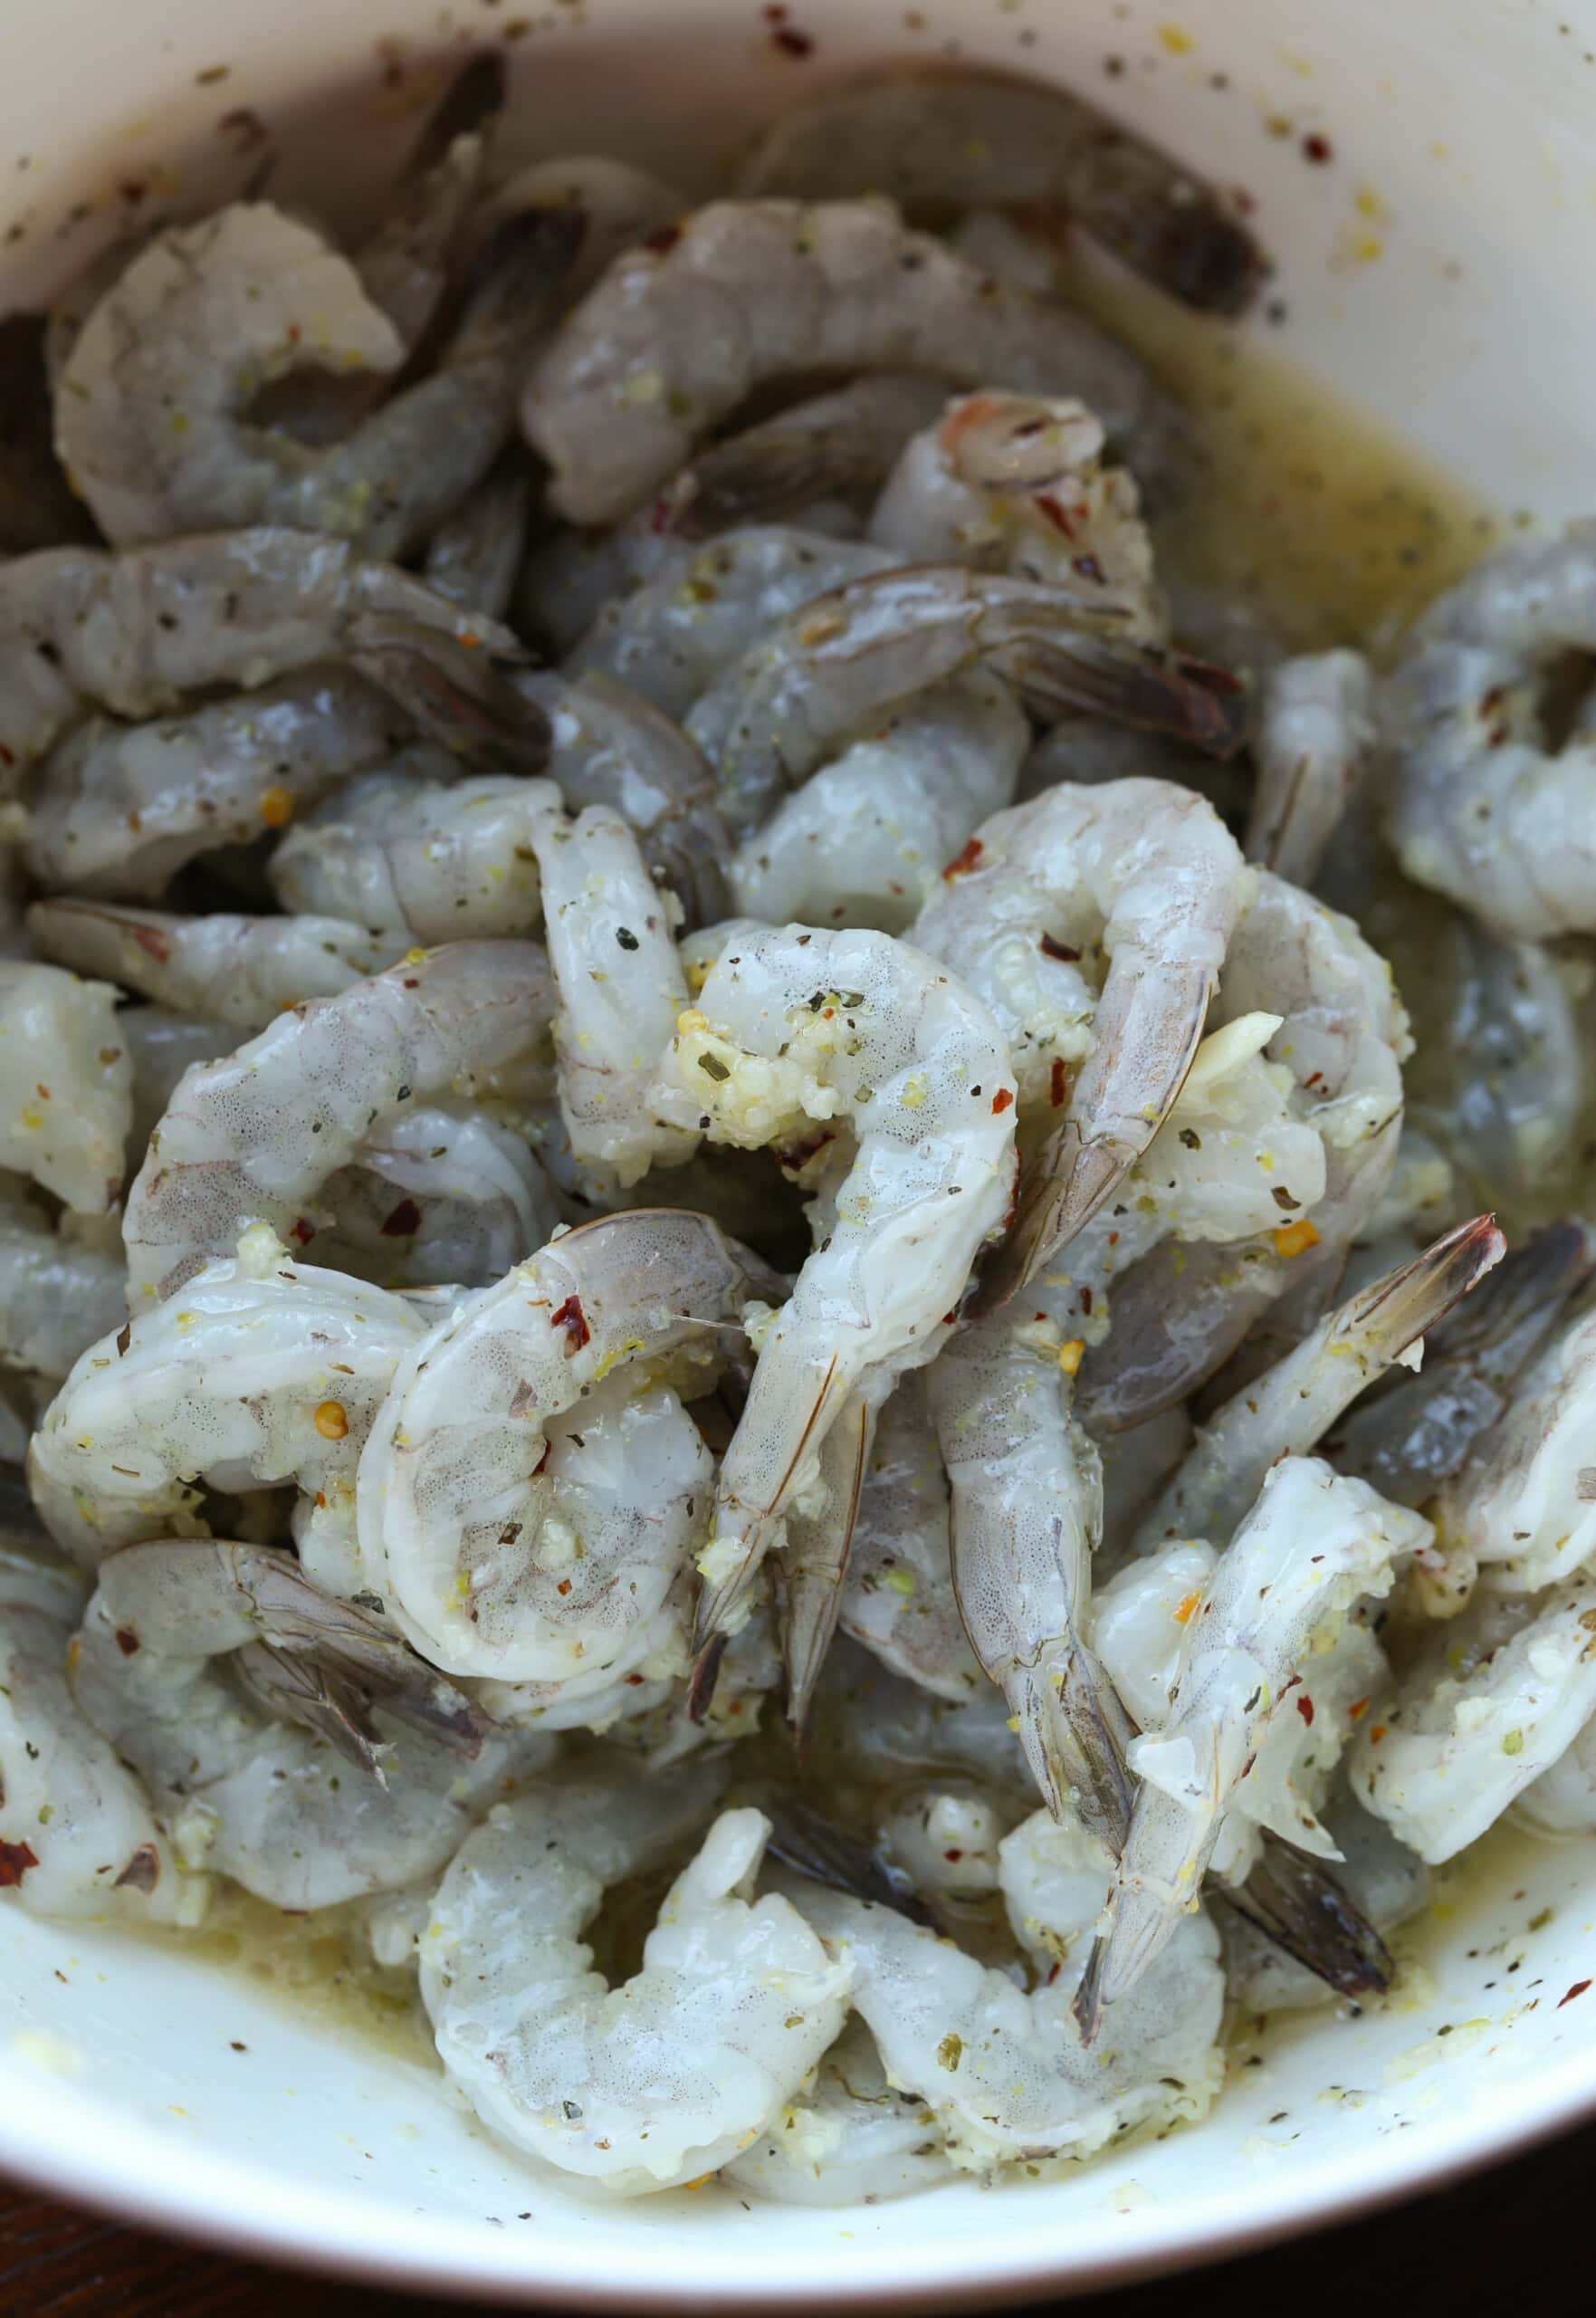 Raw shrimp tossed in a lemon garlic marinade.